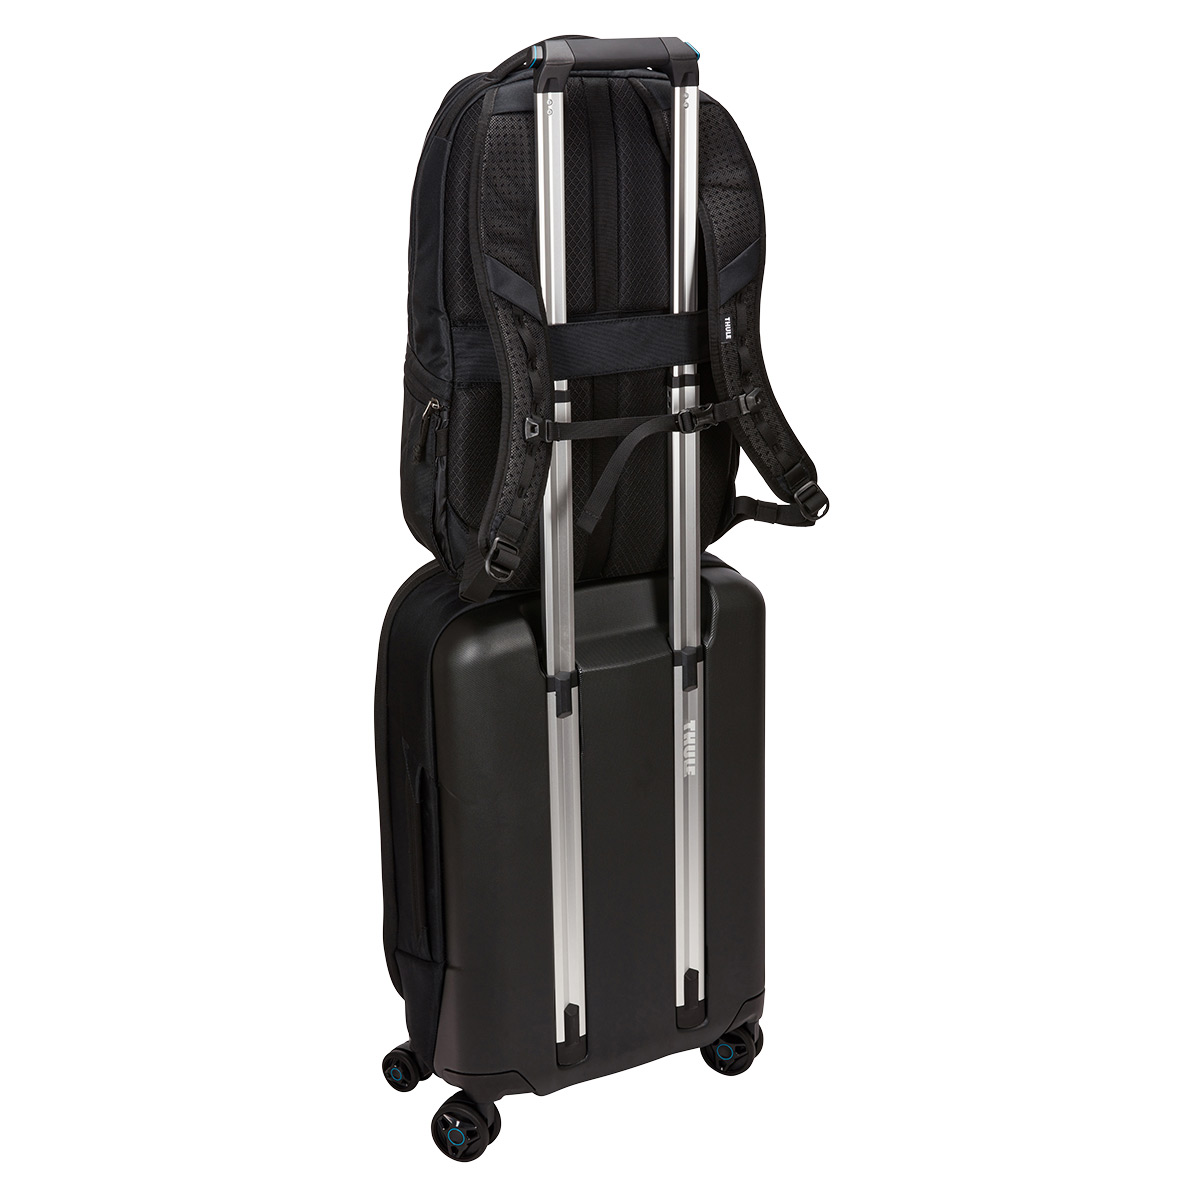 Thule Subterra Backpack 23L – Altman Luggage